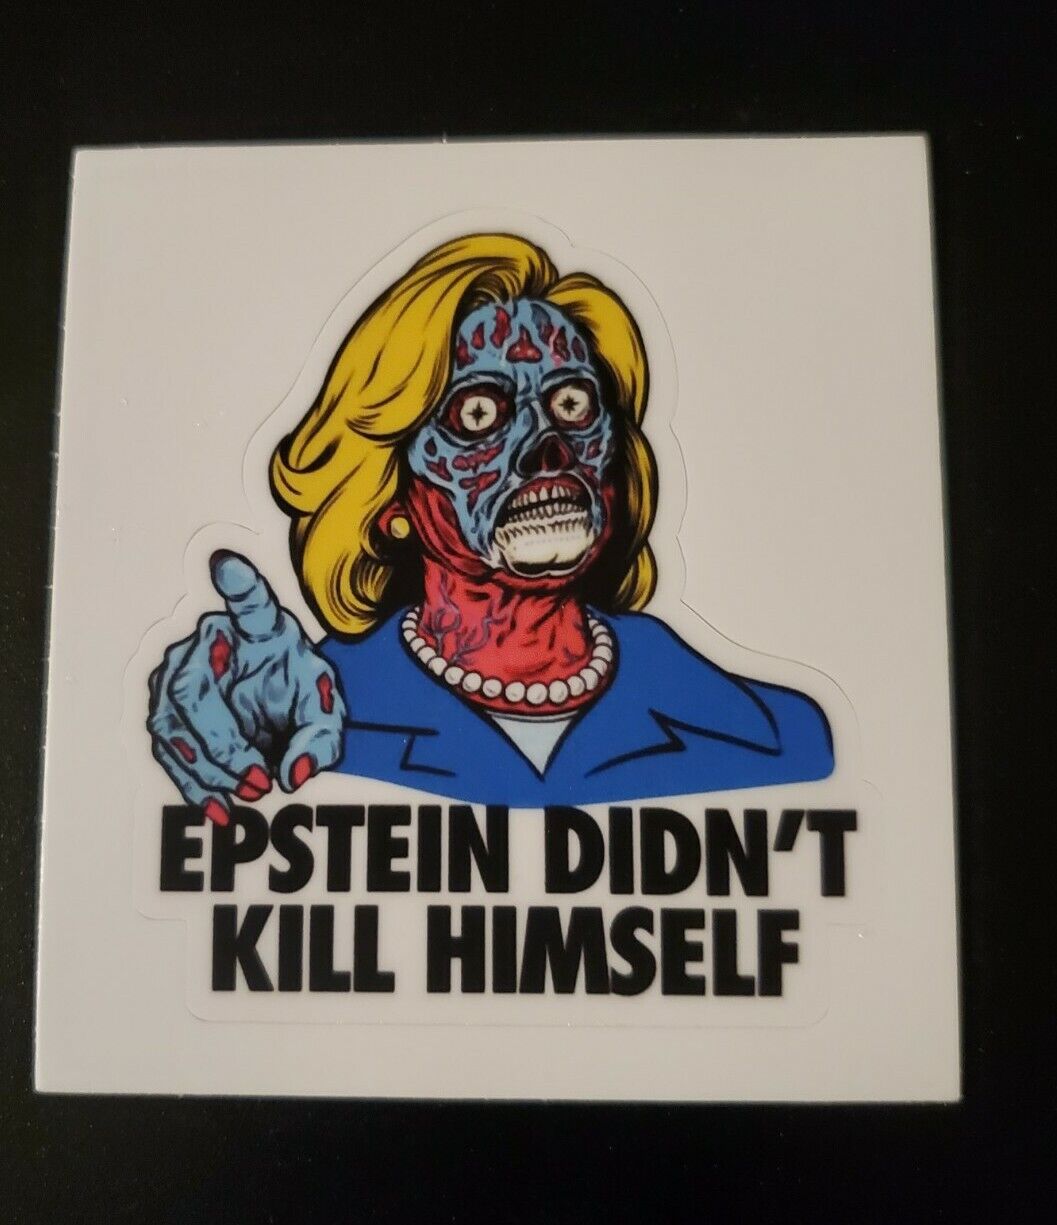 They Live Movie Sticker Hillary Clinton Epstein Didn't Kill Himself 